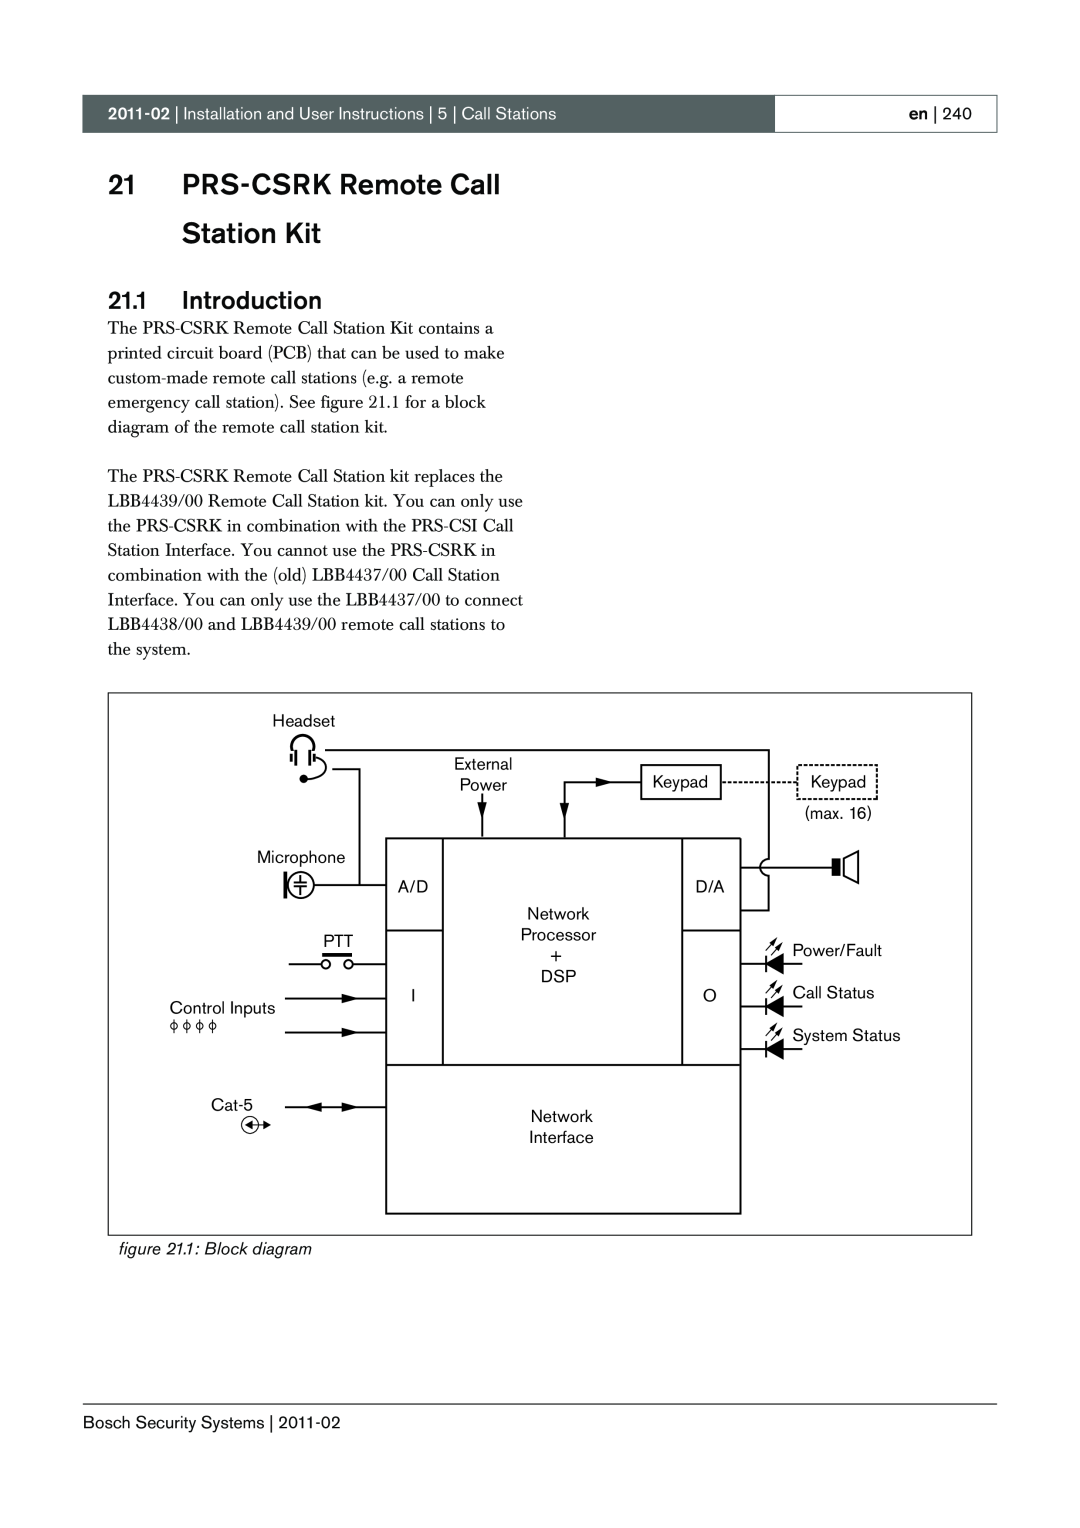 Bosch Appliances 3.5 manual 21PRS-CSRKRemote Call Station Kit, 21.1Introduction, 1 Block diagram 